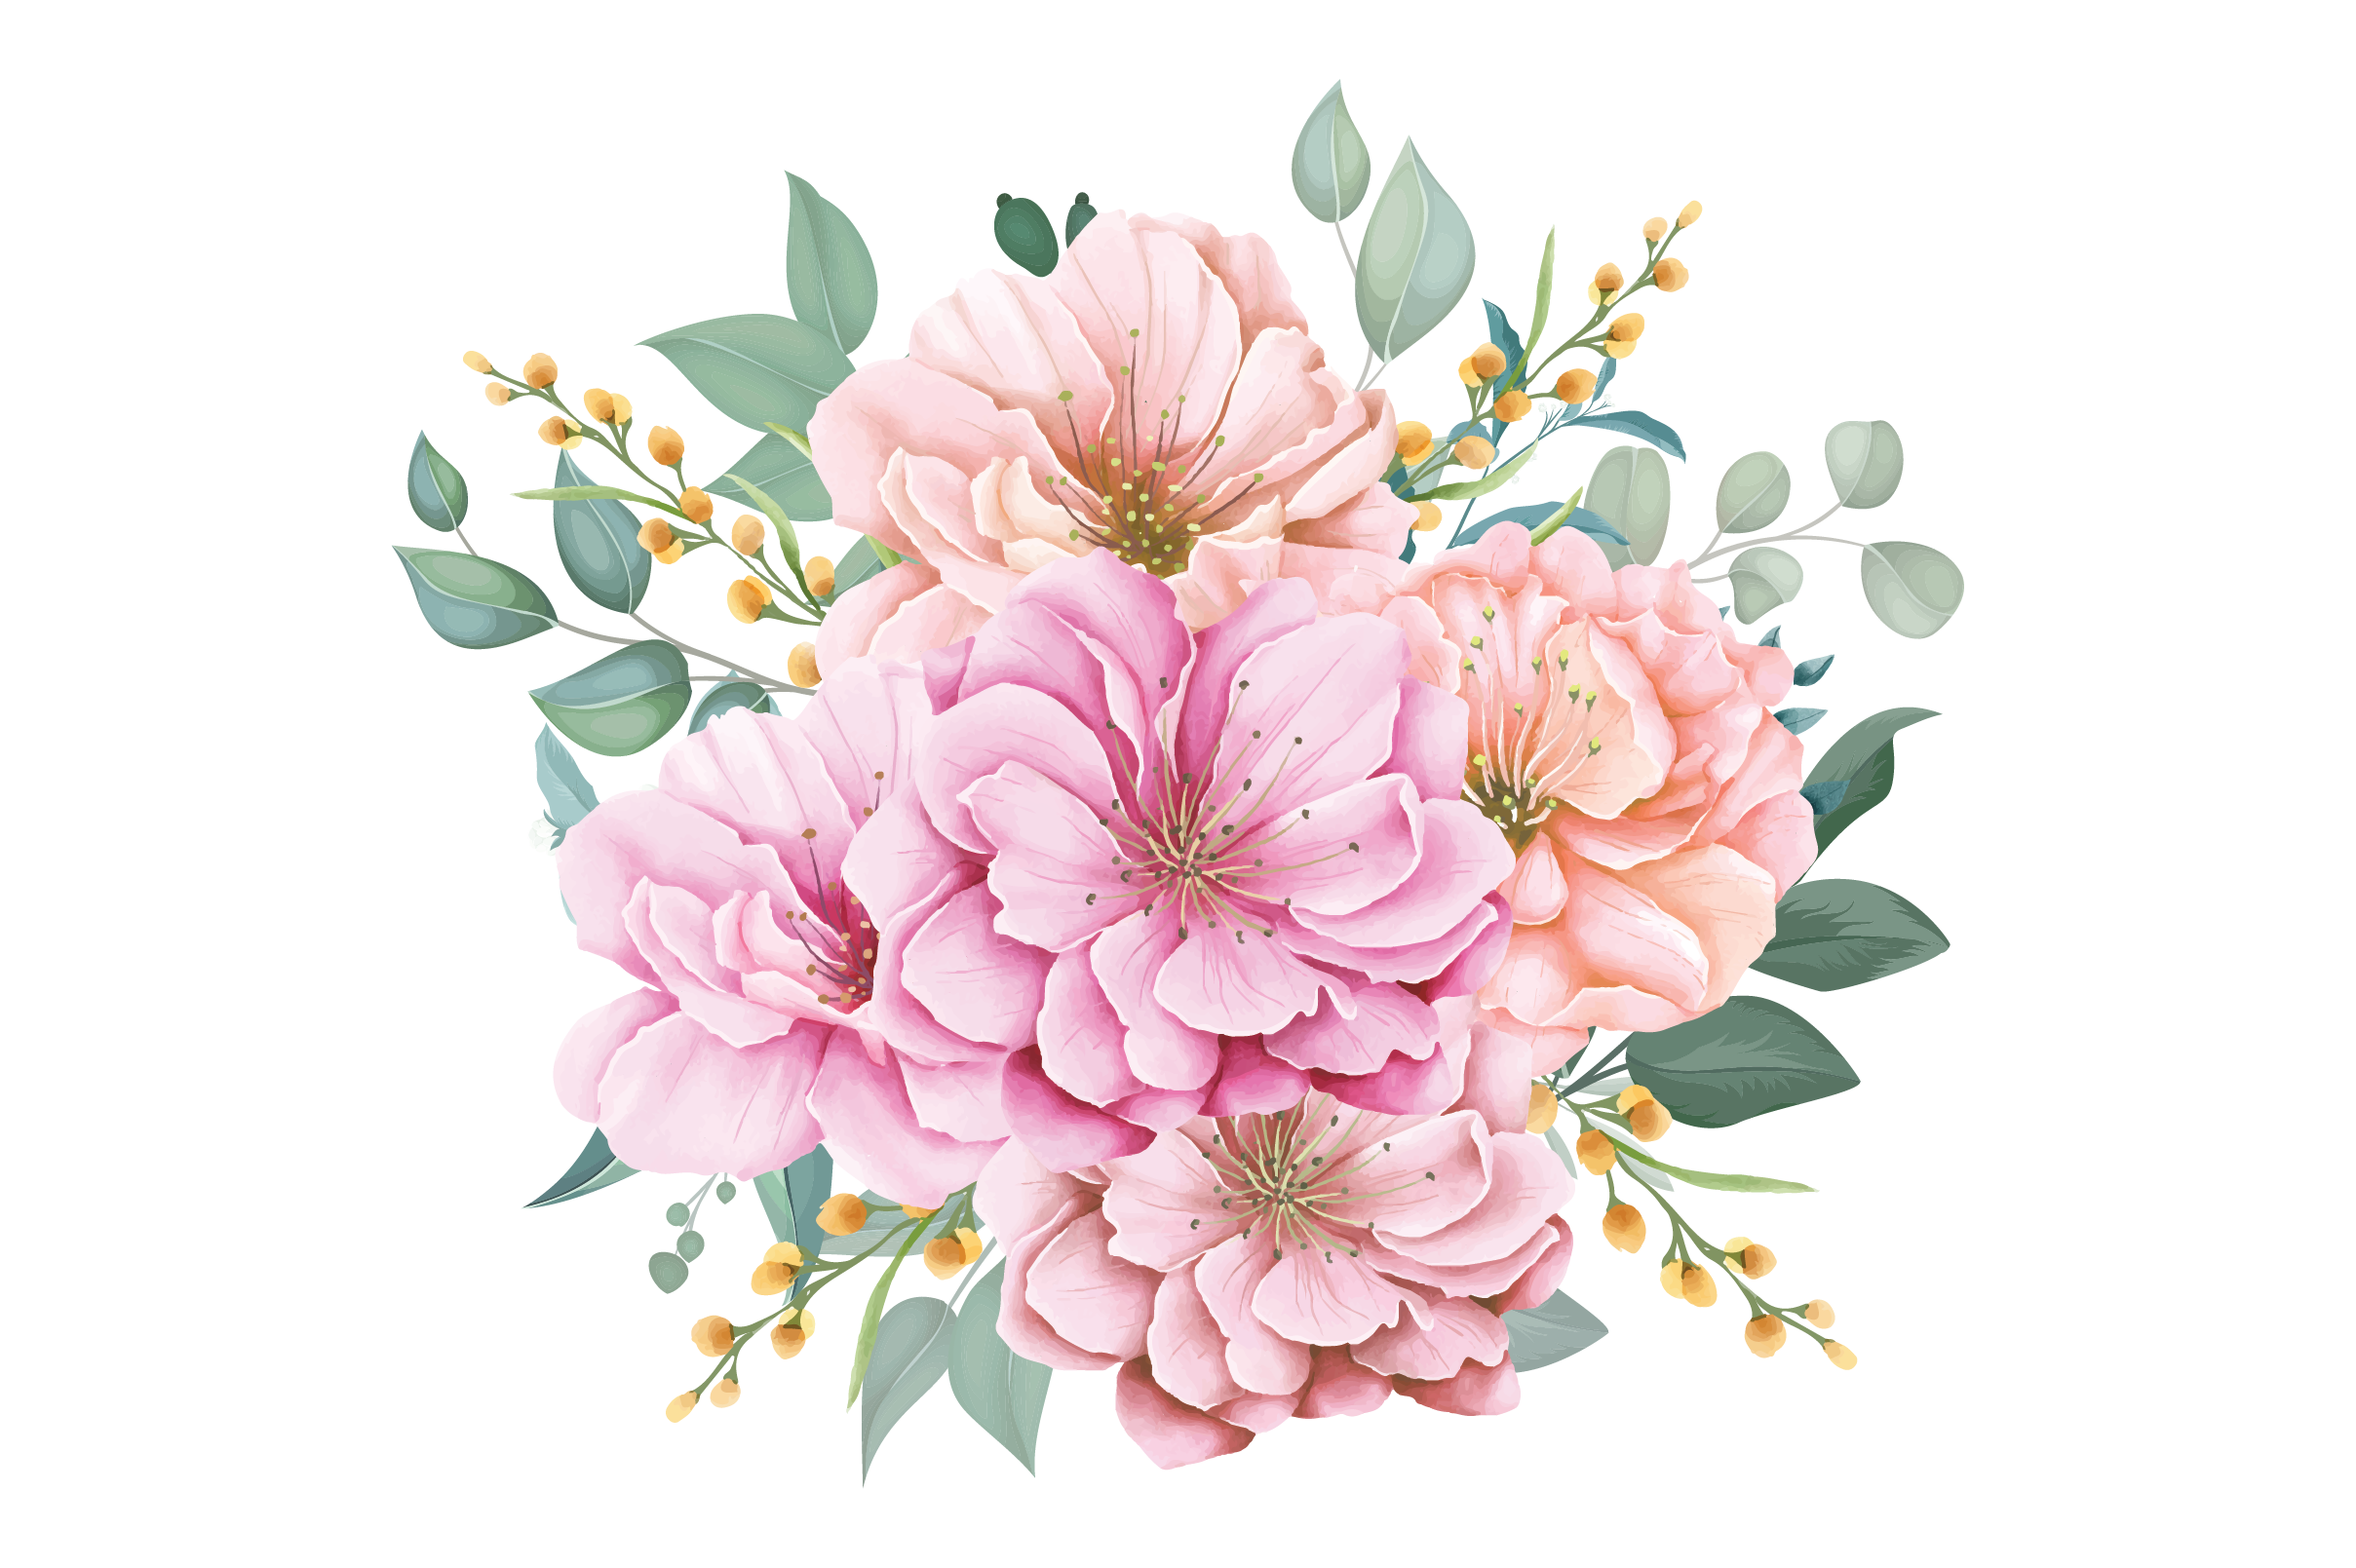 Flowers Watercolor Vector Illustration Illustration par aekblahareda